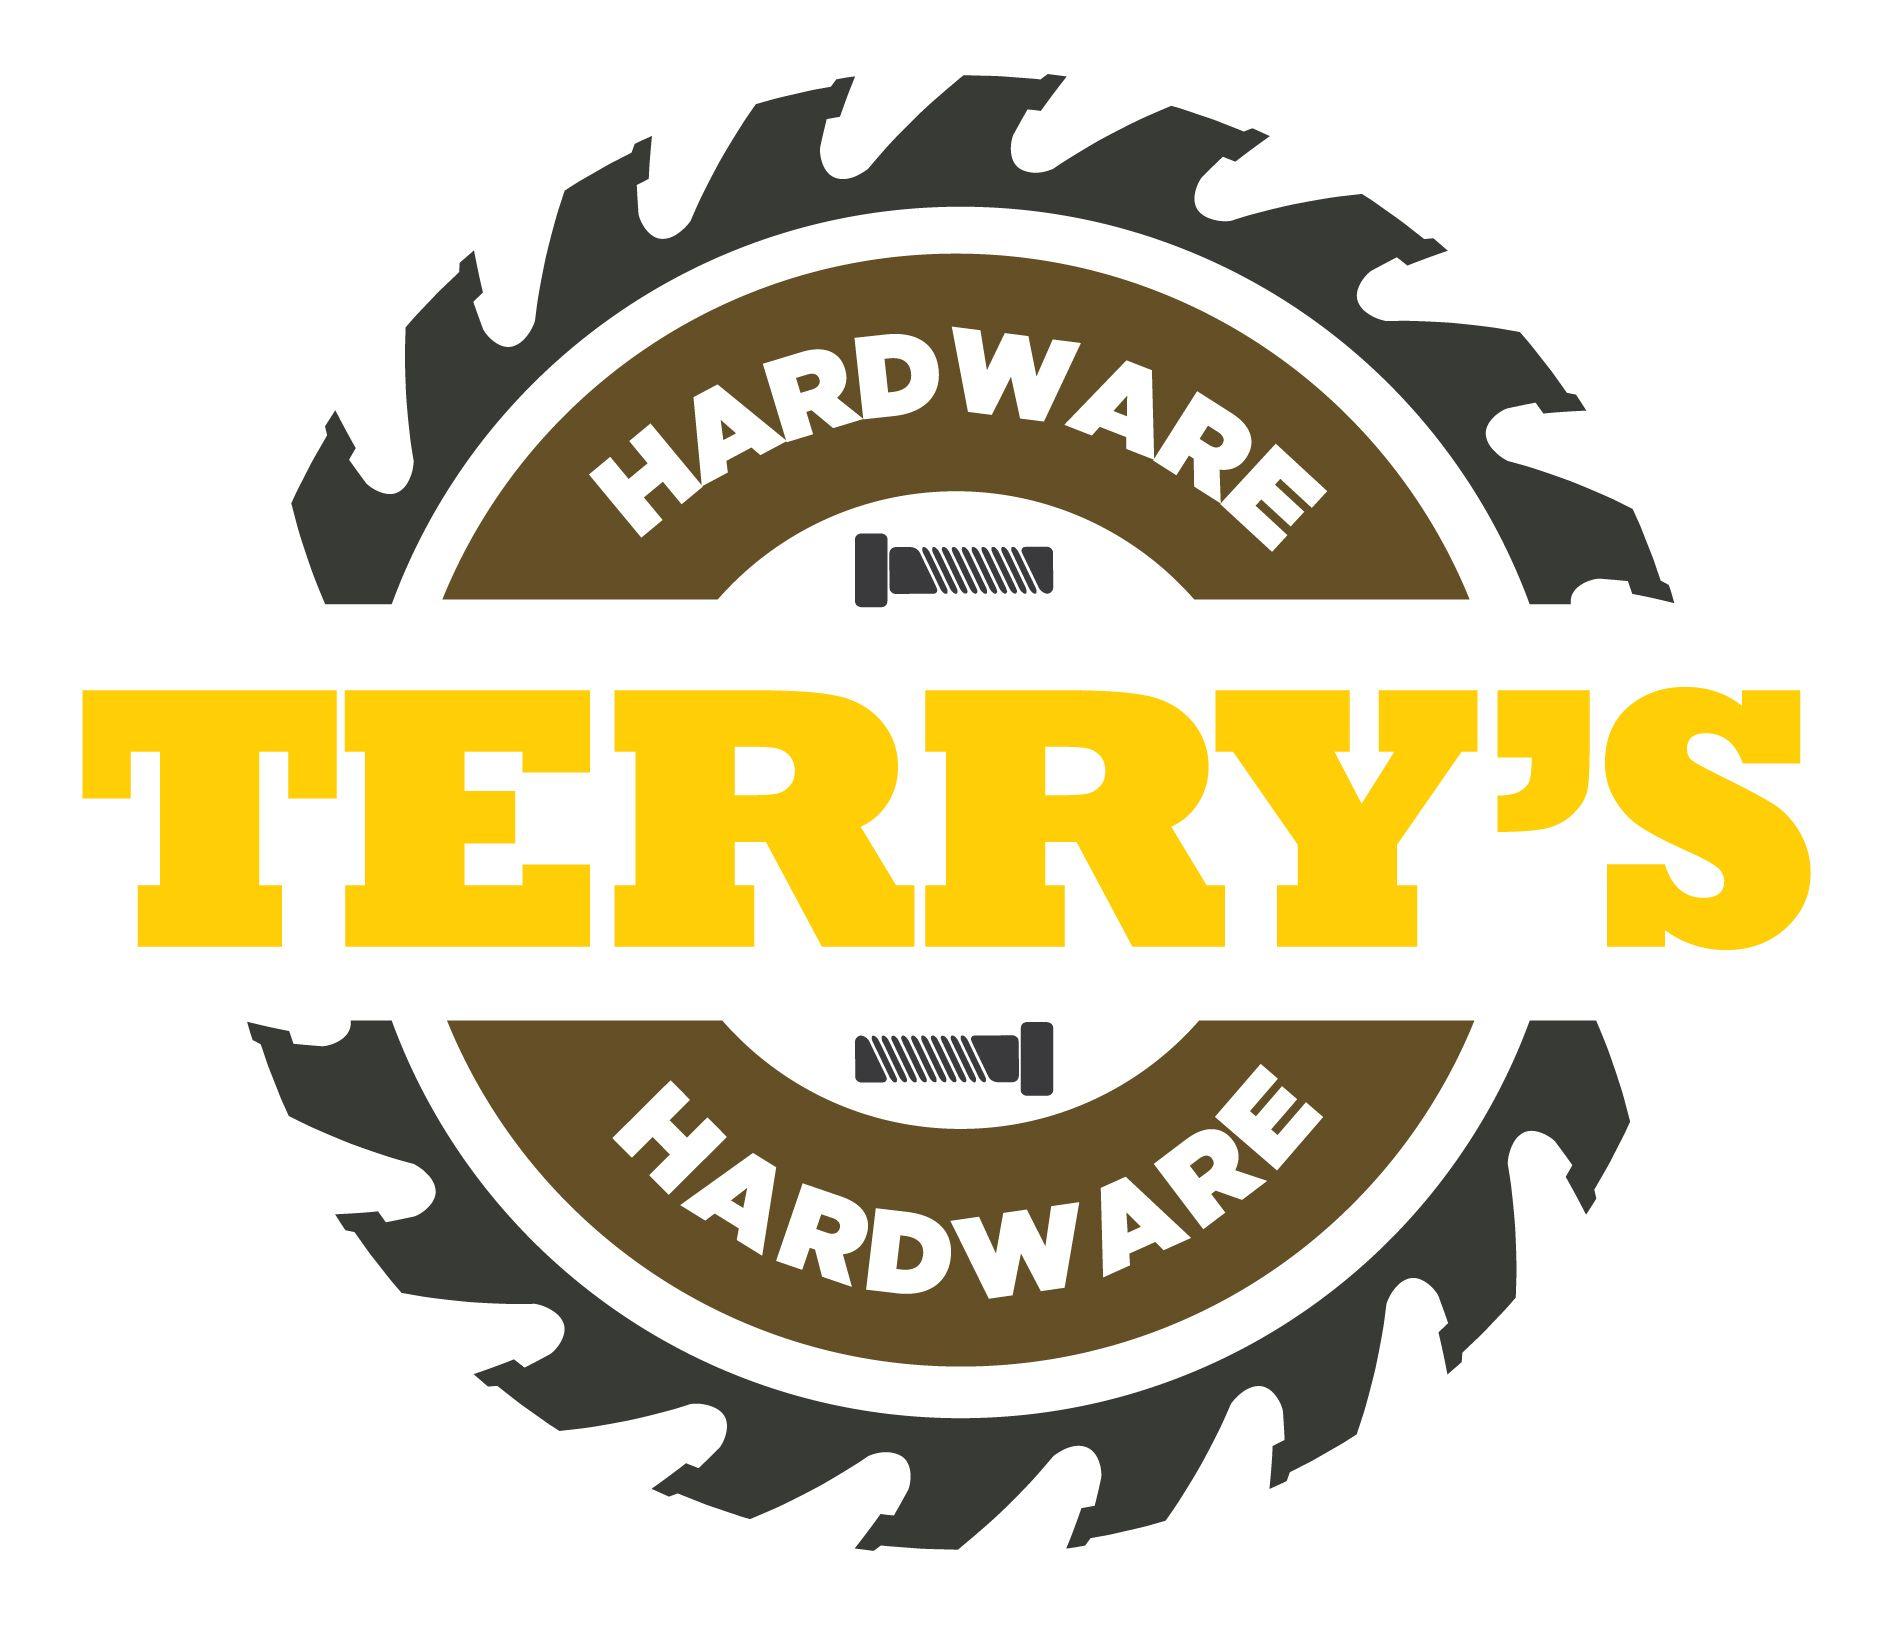 Hardware Logo - Terry's Hardware has a new logo